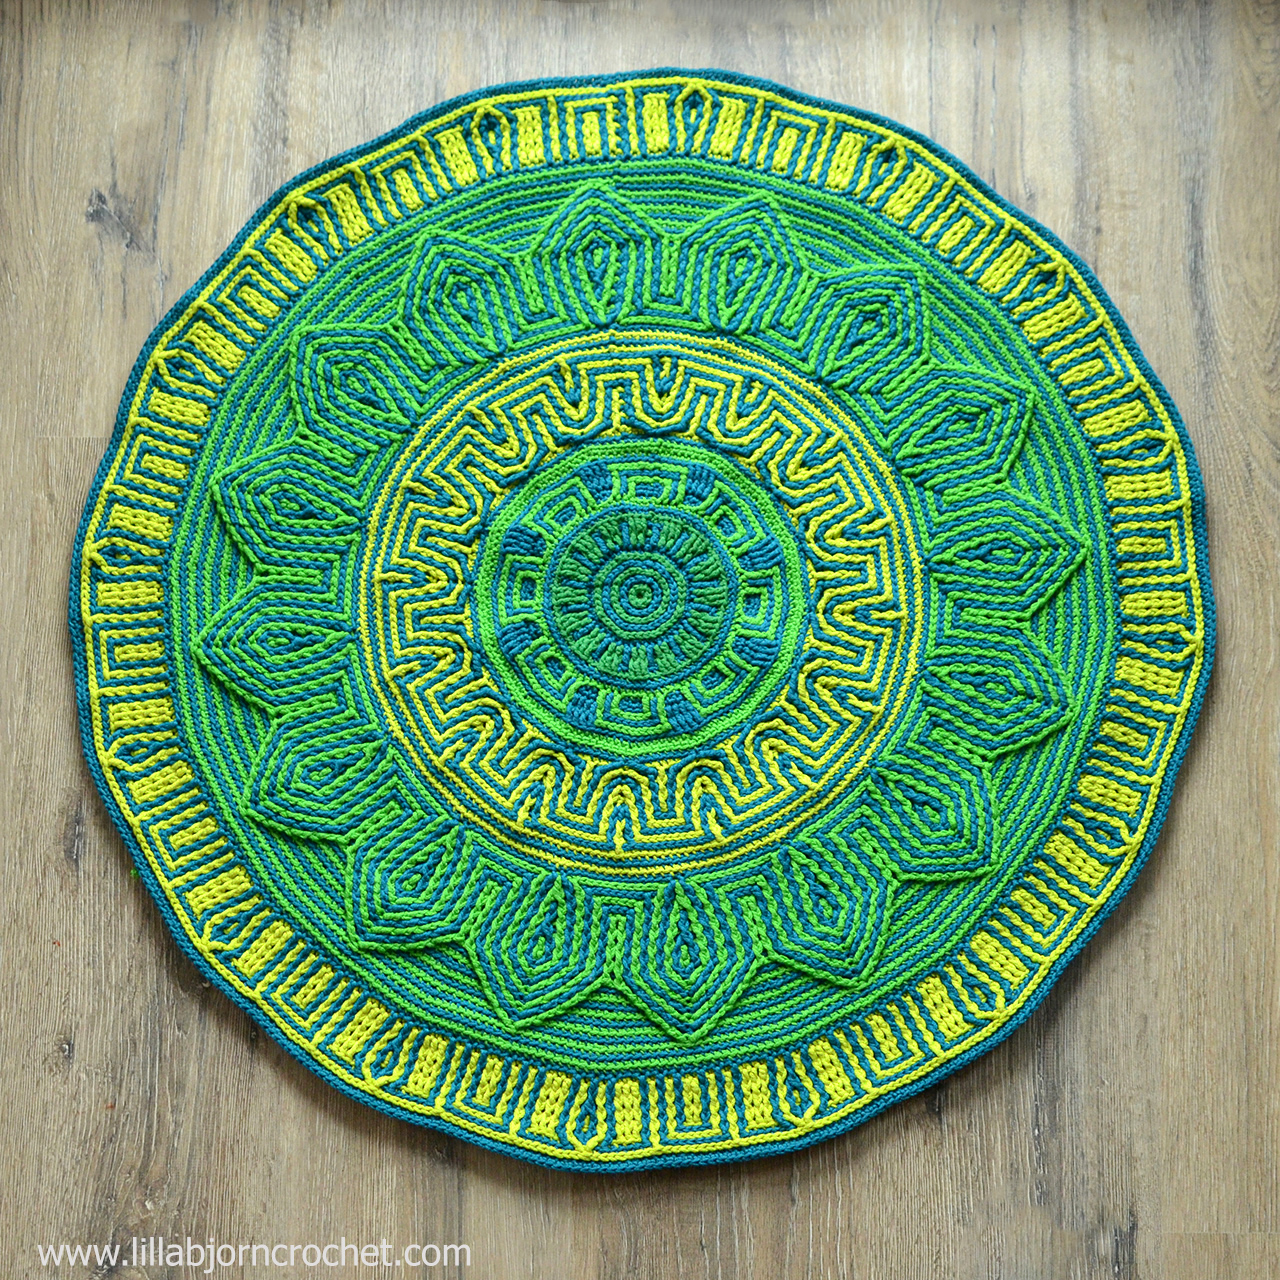 Labyrinth Mandala Rug - original overlay crochet pattern by Lilla Bjorn